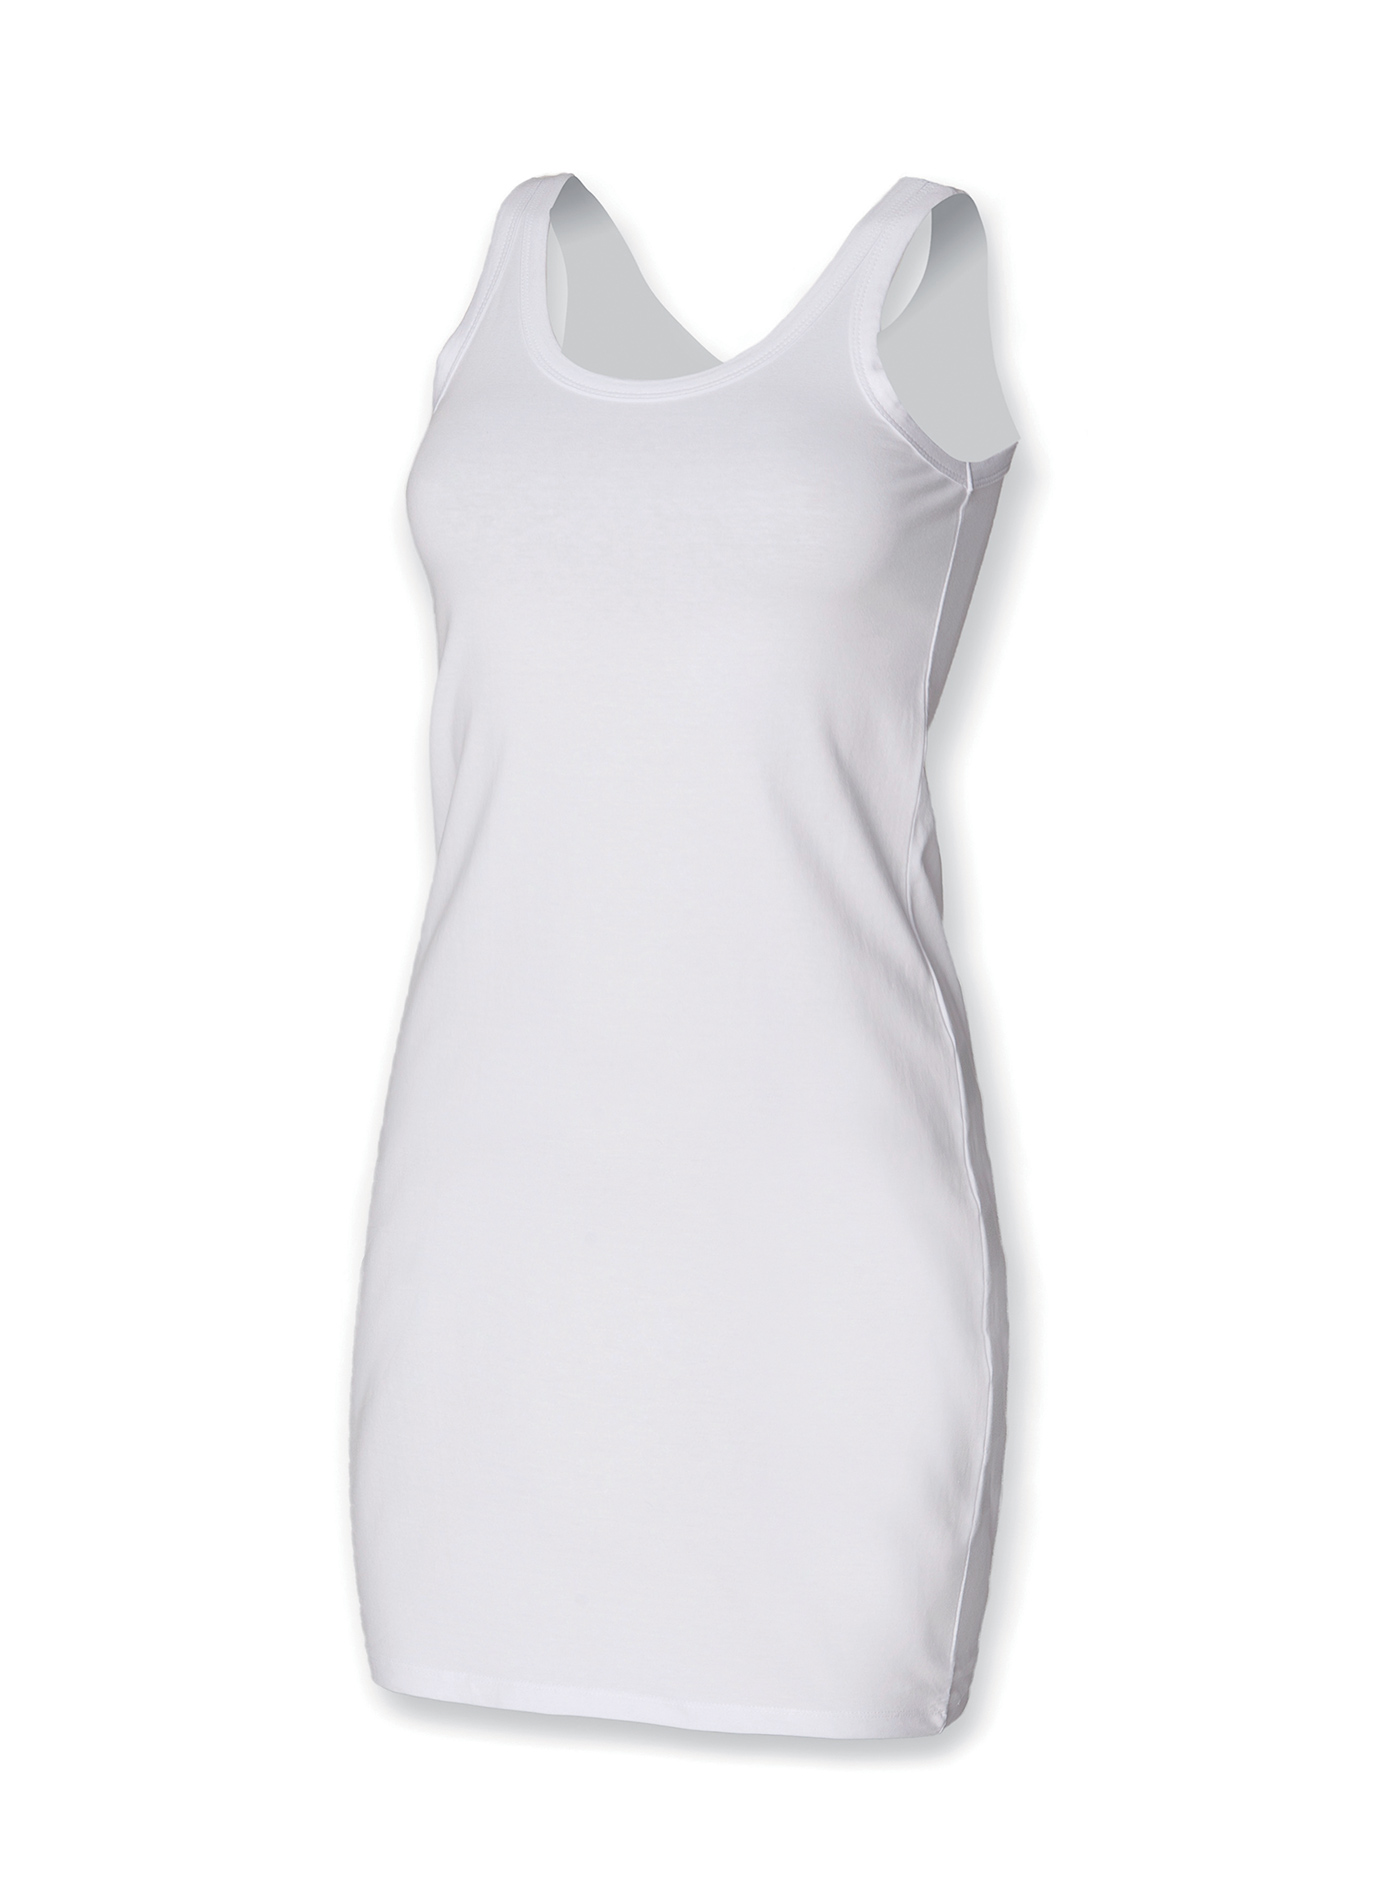 Dámské strečové šaty Skinnifit - Bílá L